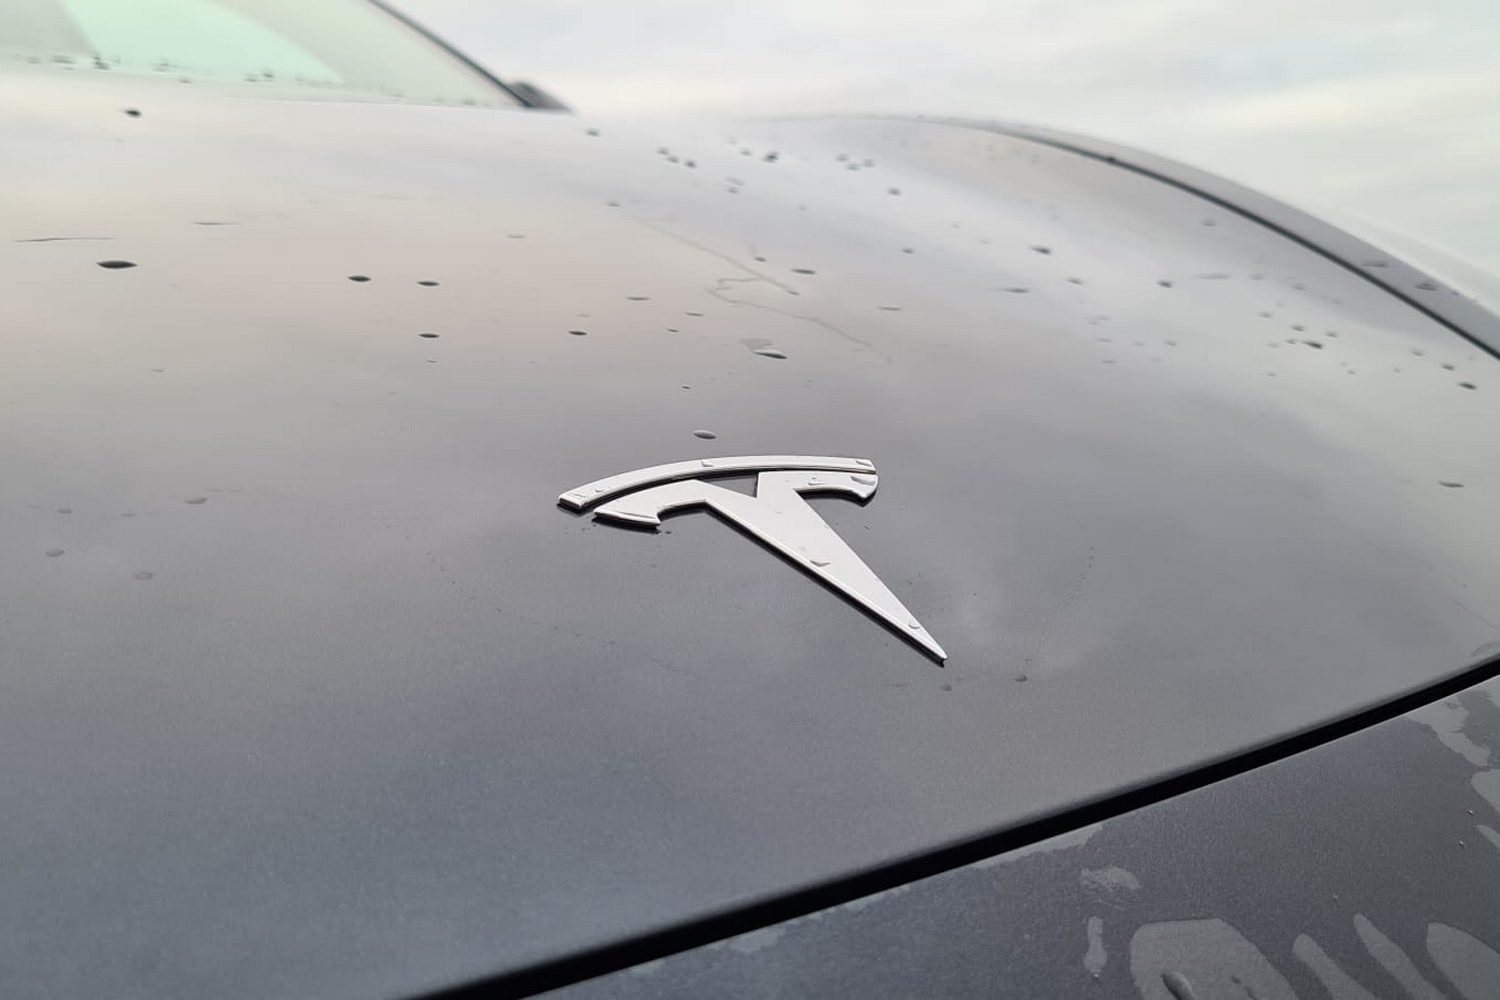 Tesla Model 3 